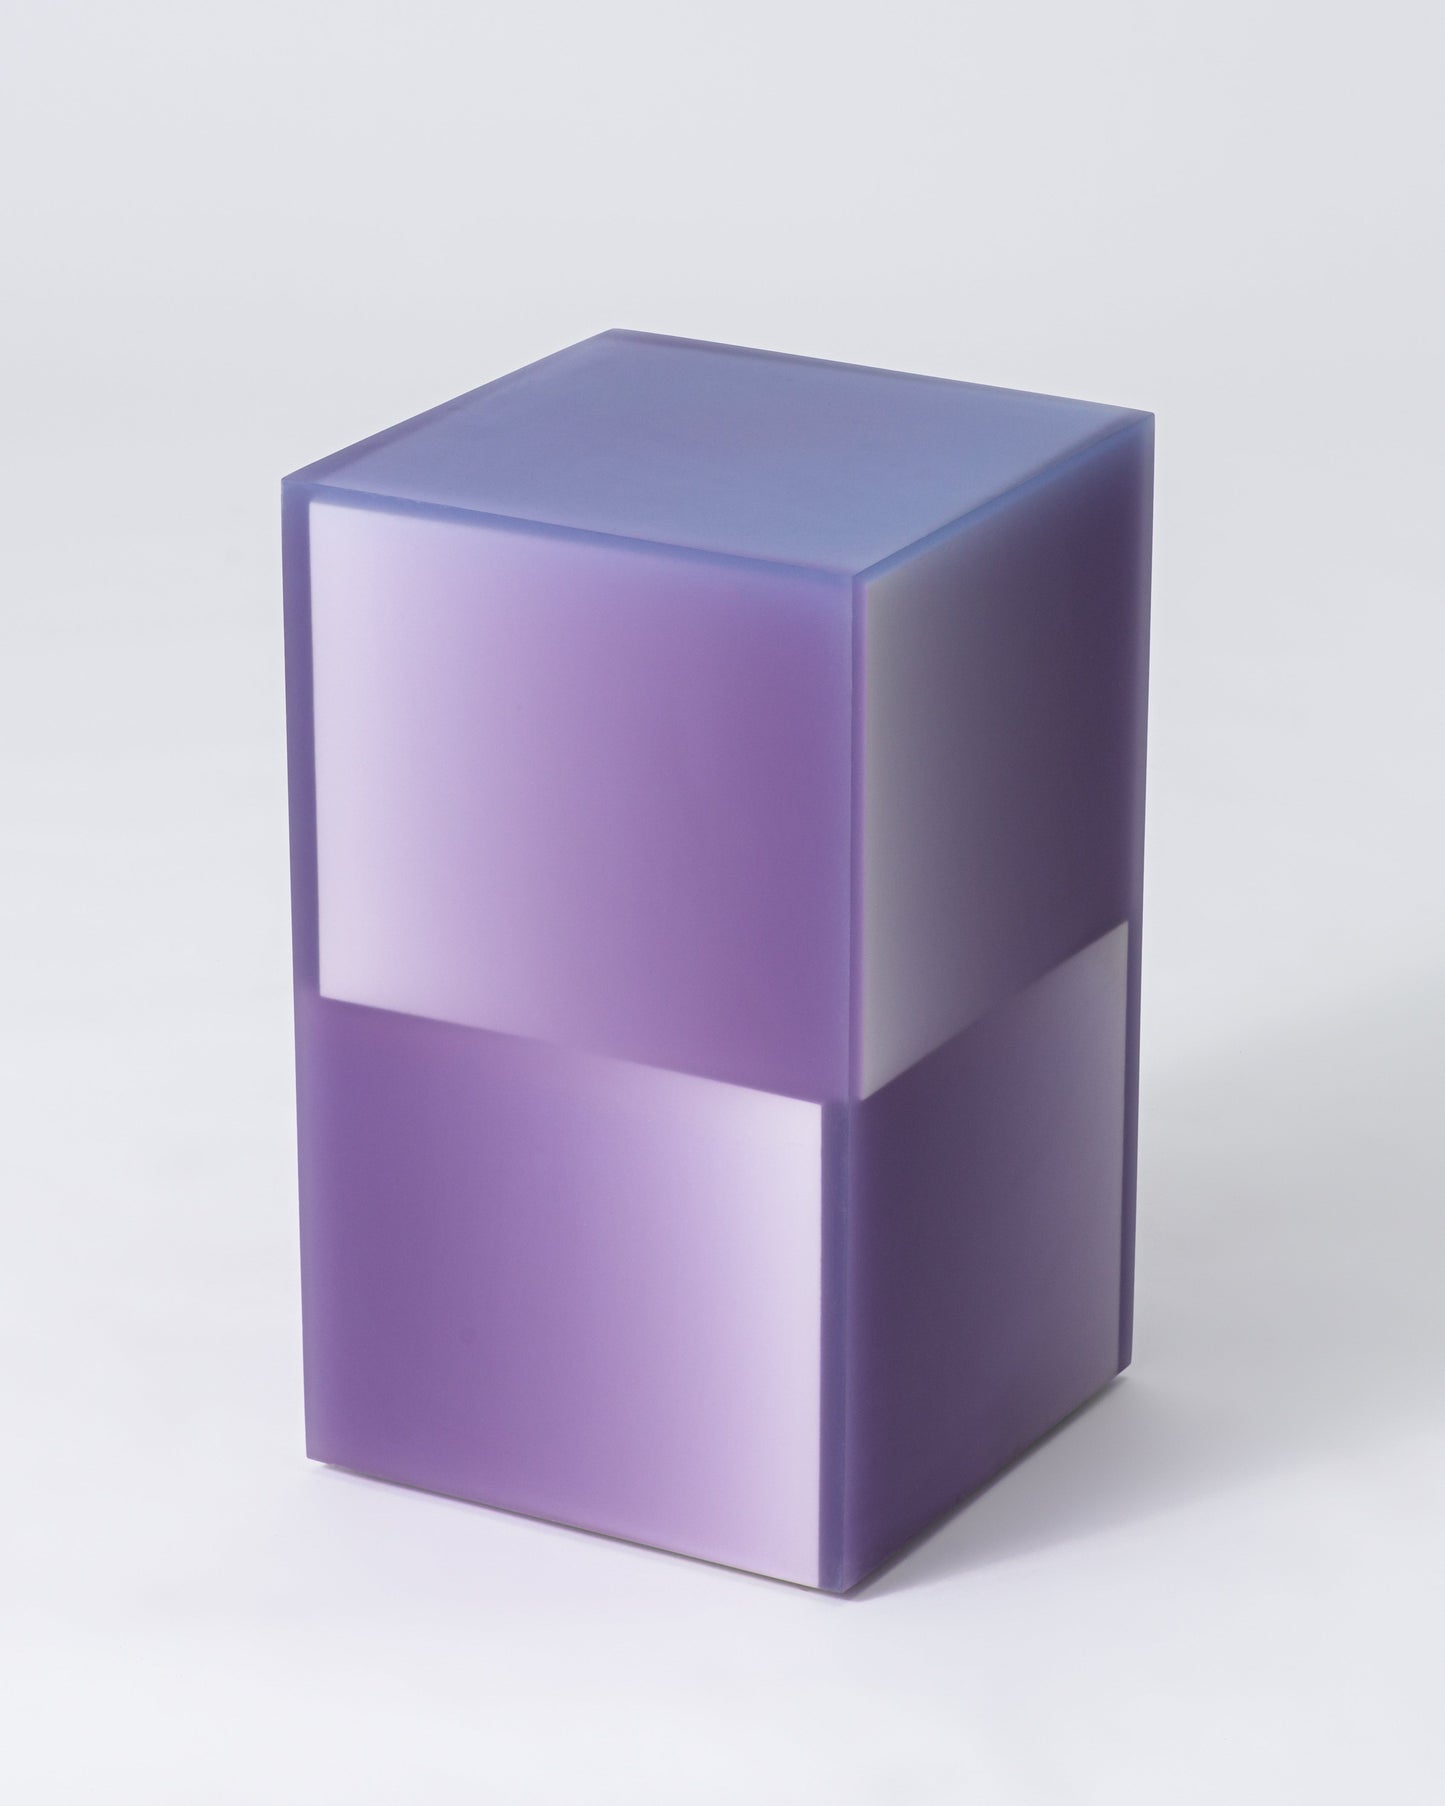 2-Way Shift Box in Purple sitting facturestudio 